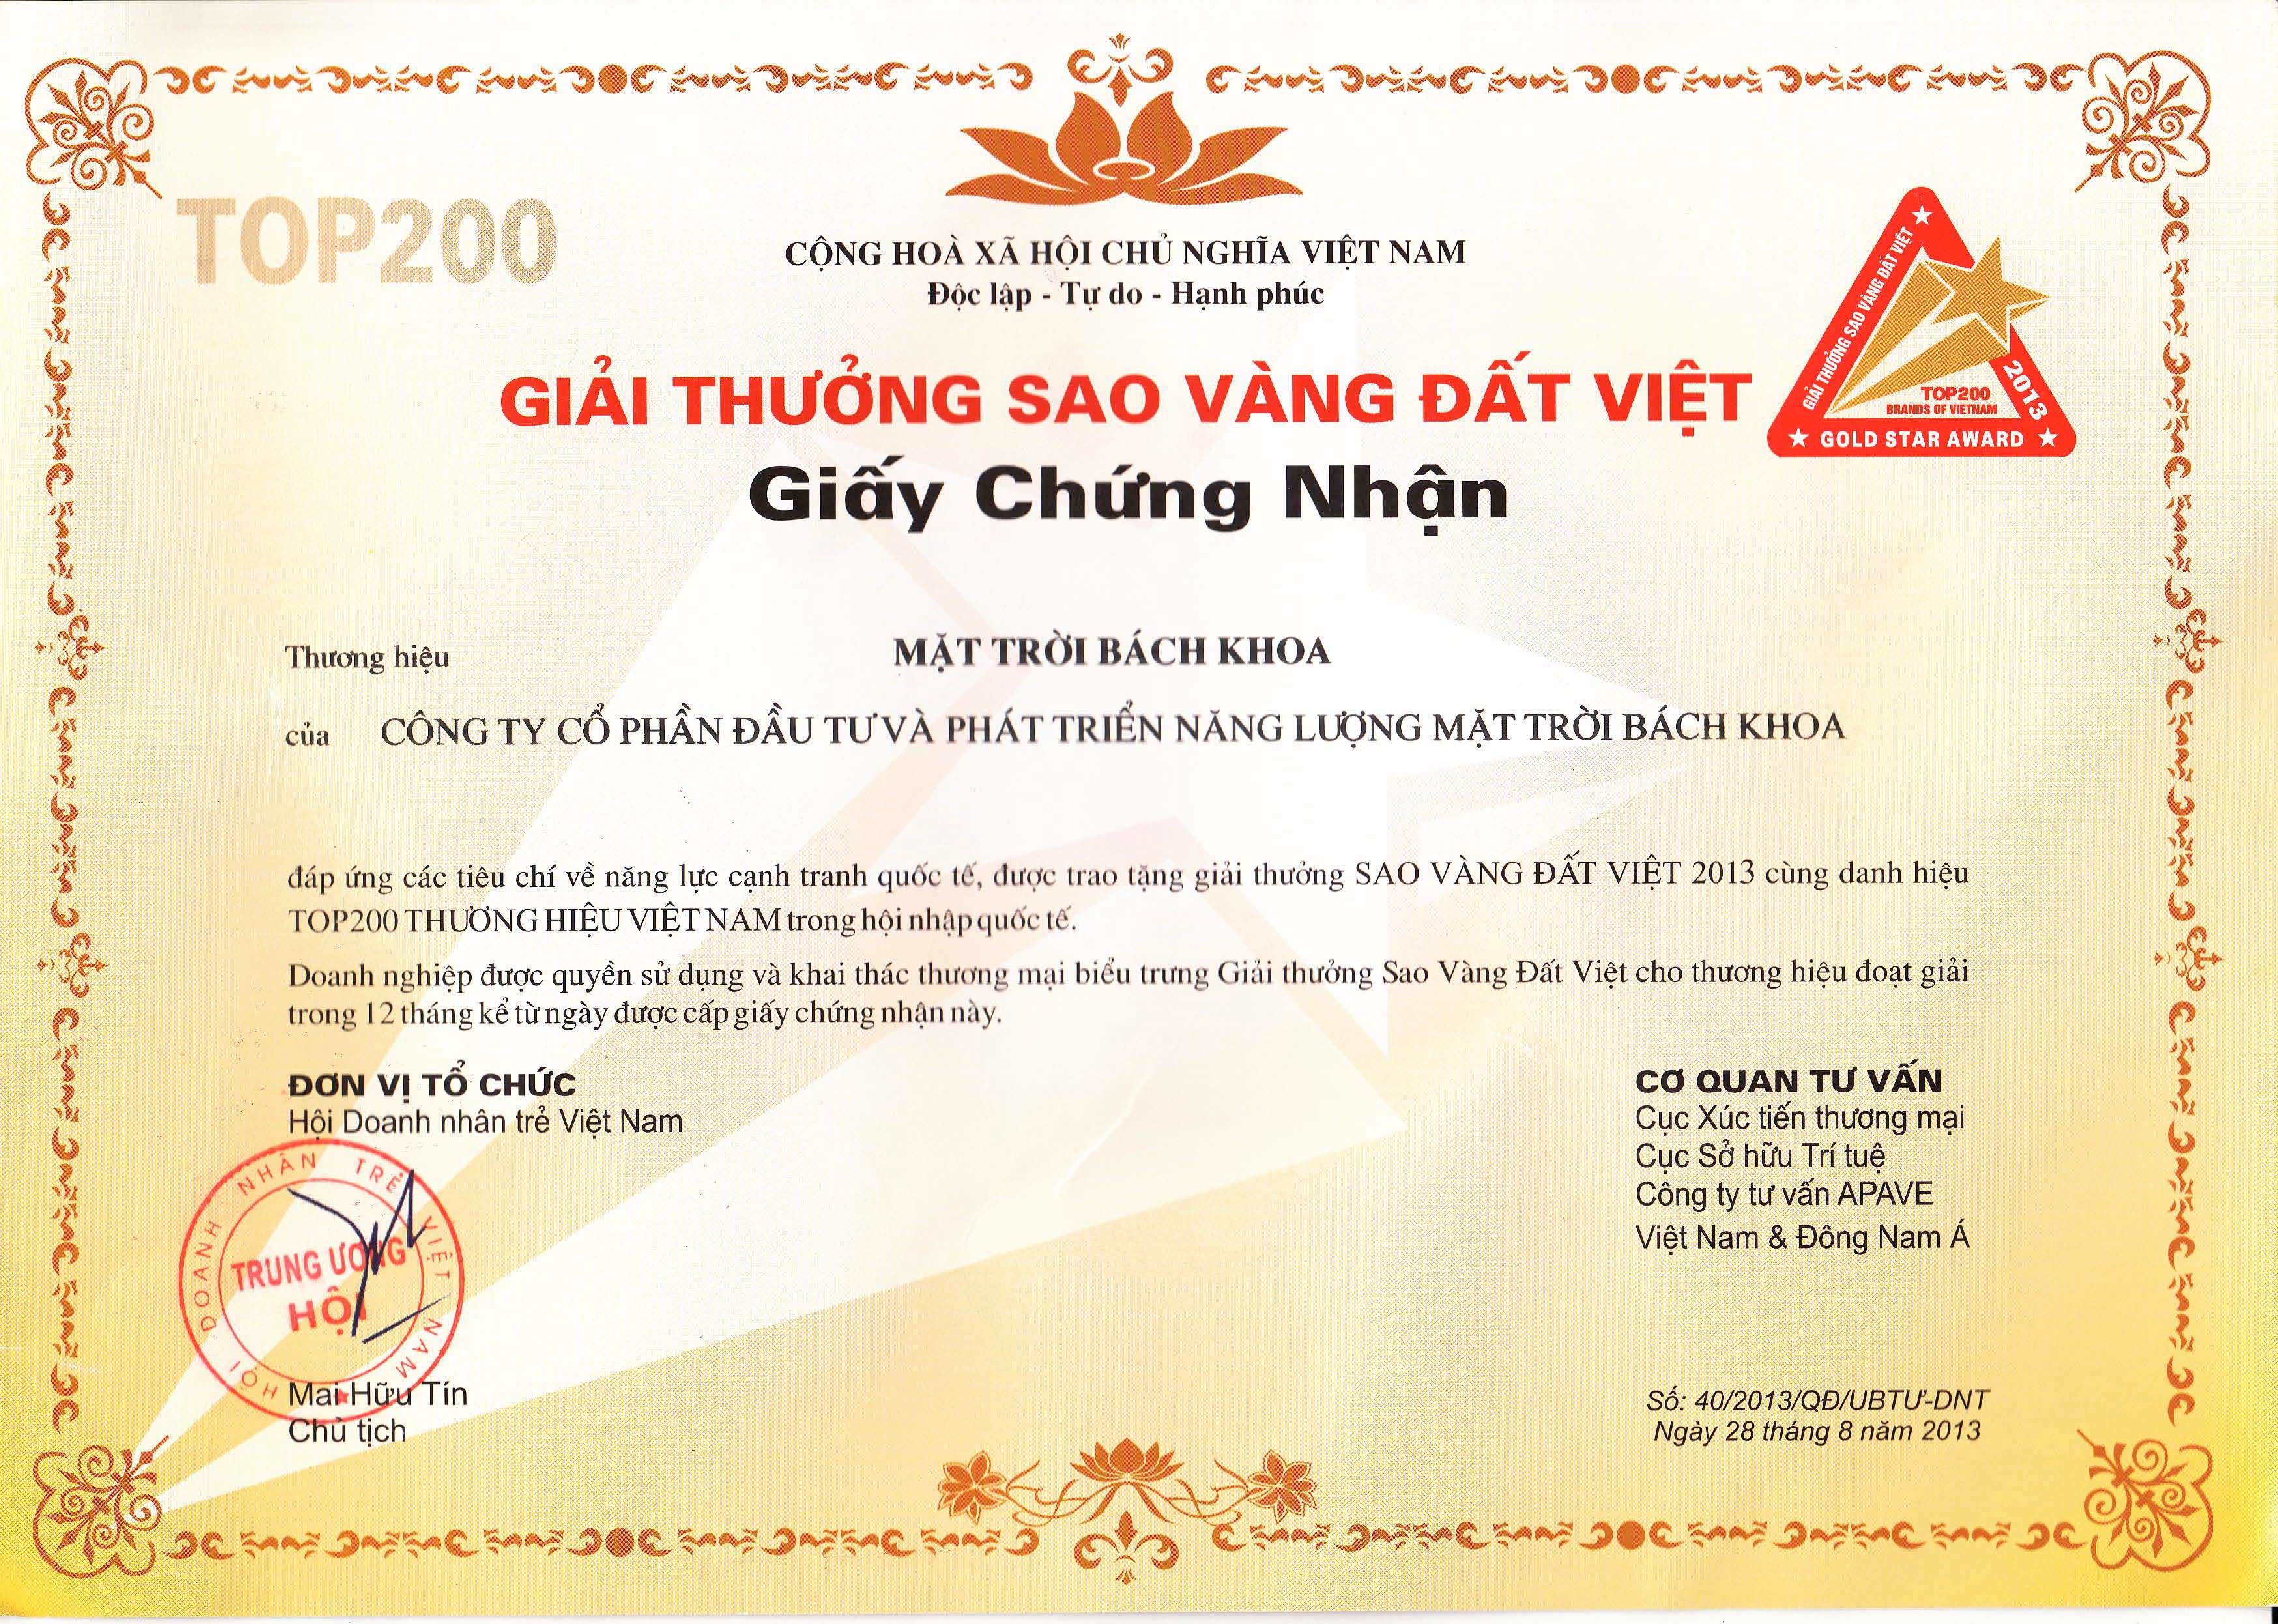 Vietnam Gold Star Award 2013